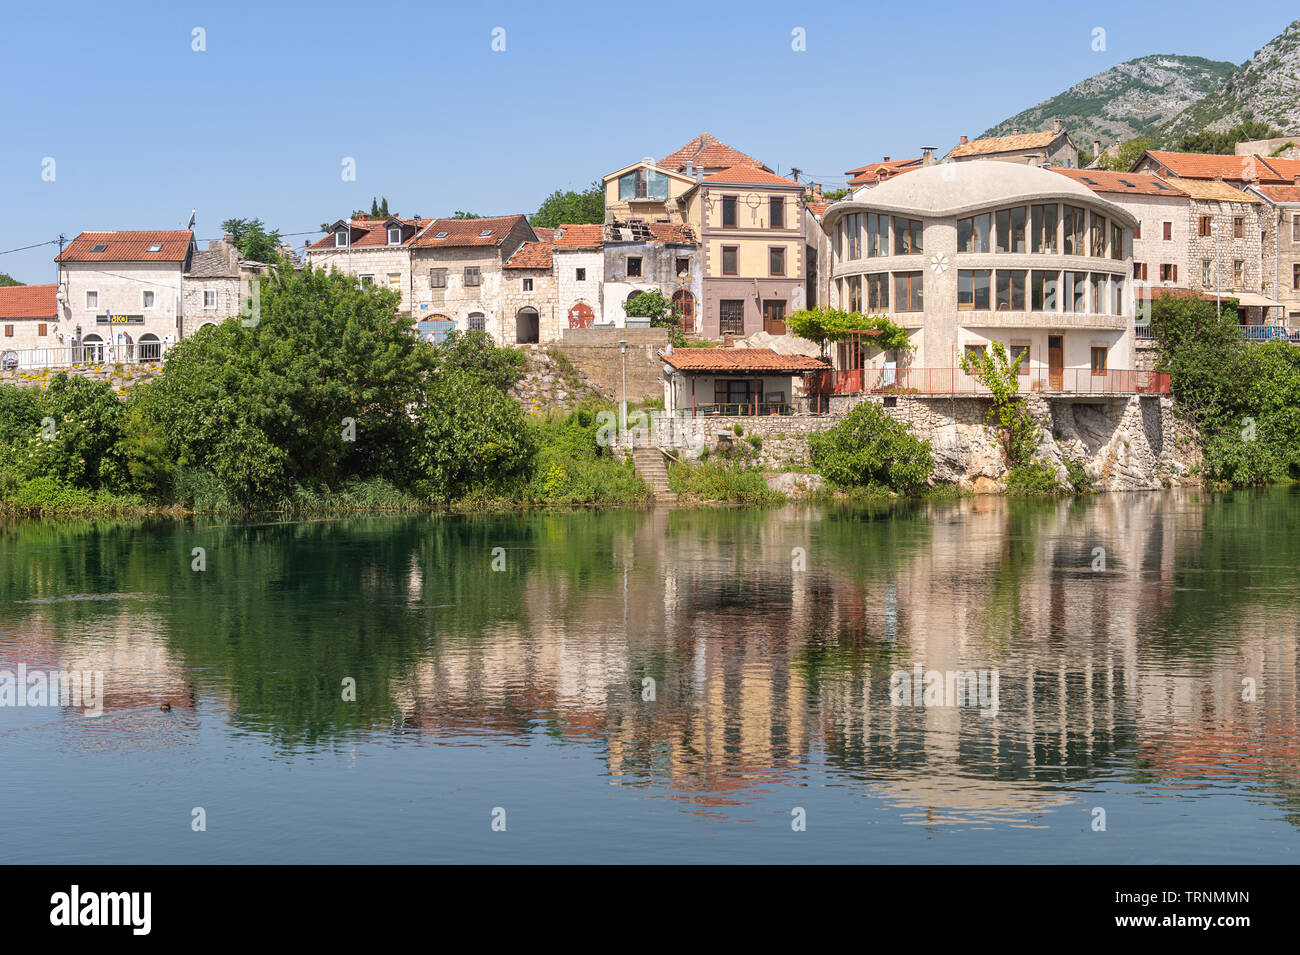 A view of the Trebišnjica river at city of Trebinje, located in the Republika Srpska, Bosnia and Herzegovina. Stock Photo